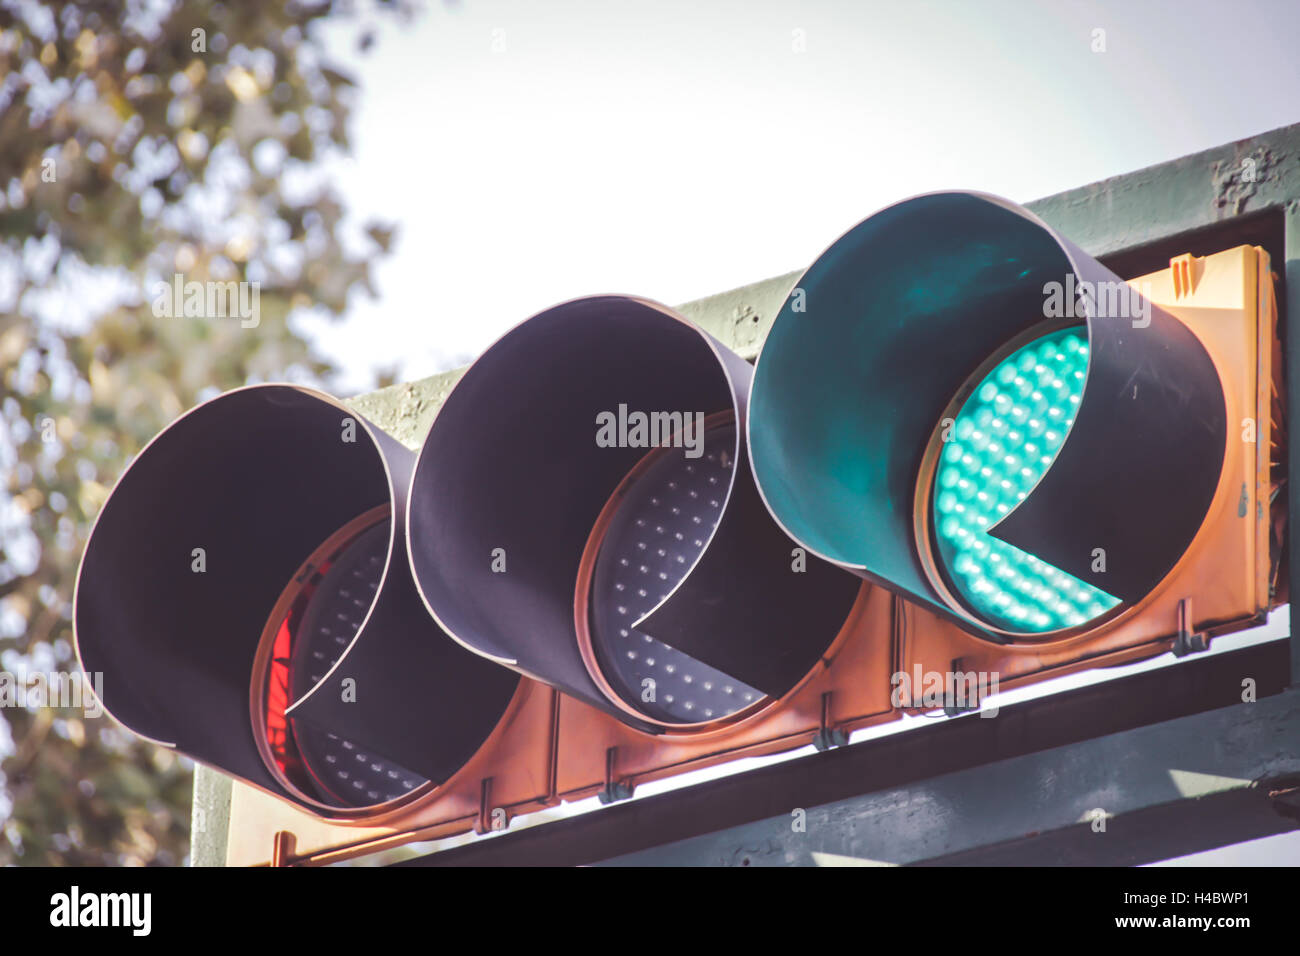 Photograph of a traffic light on urban scenario Stock Photo